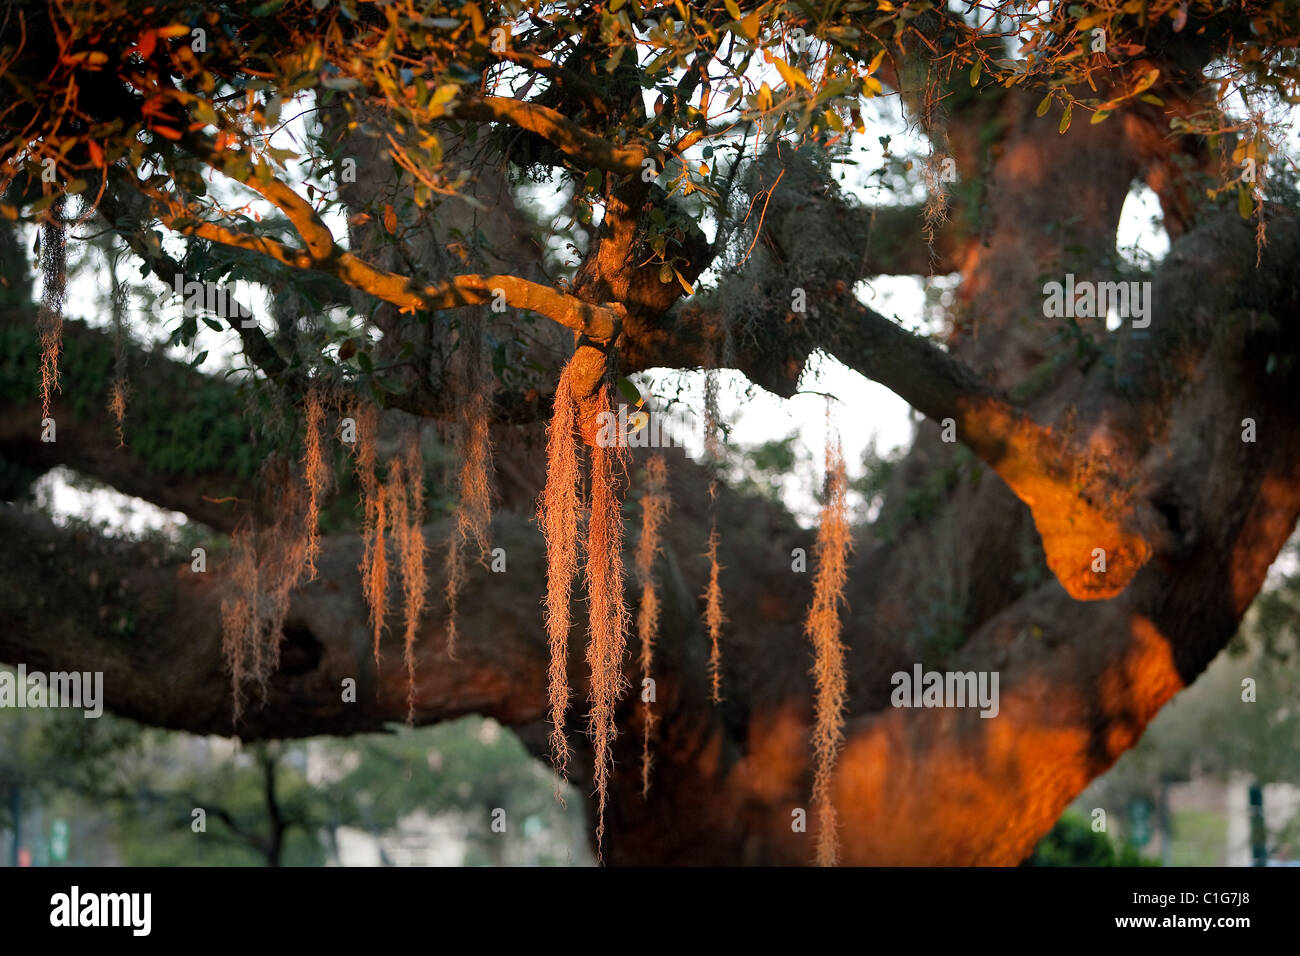 Liveoak tree with hanging Spanish Moss in park near Charleston, SC, USA Stock Photo